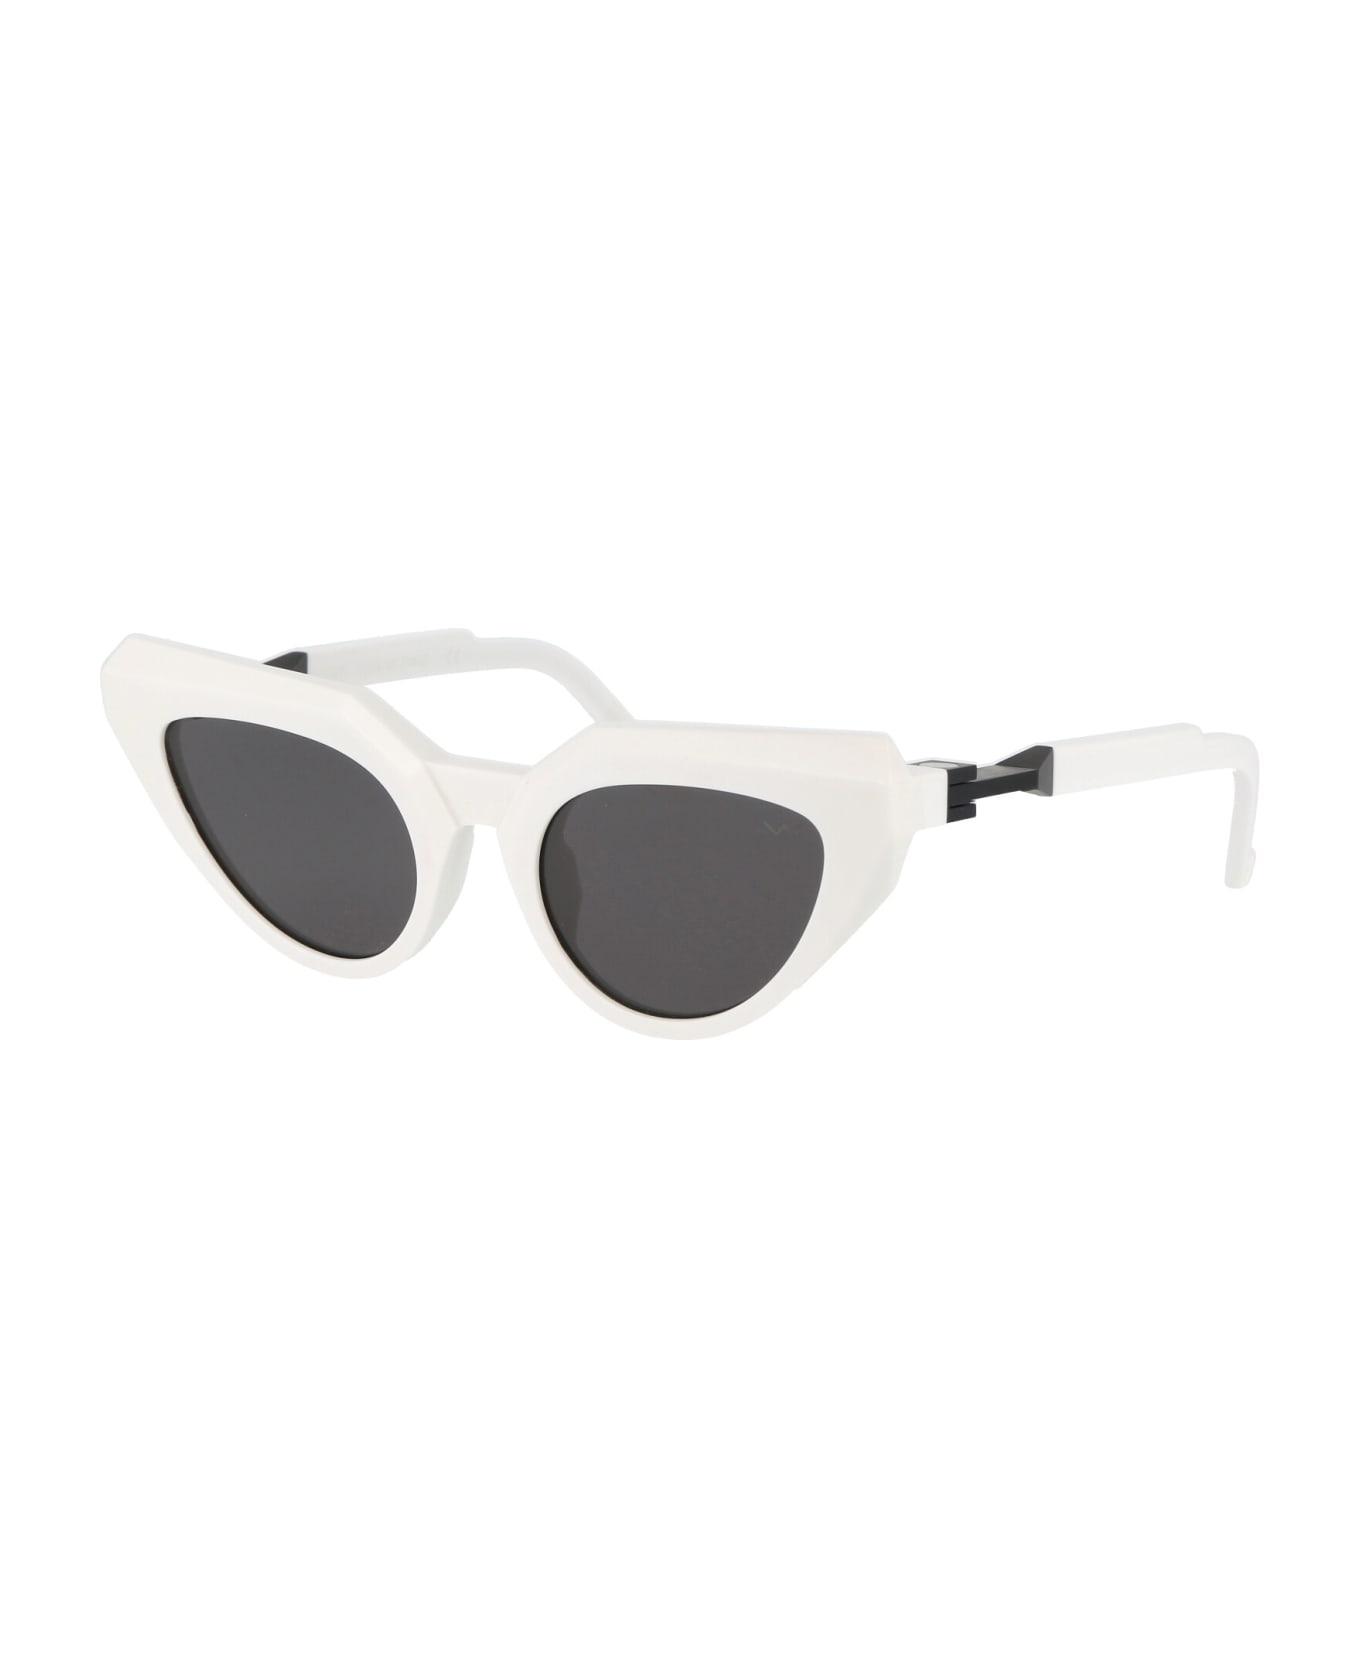 VAVA Bl0028 Sunglasses HANAH - WHITE|BLACK FLEX HINGES|BLACK LENSES